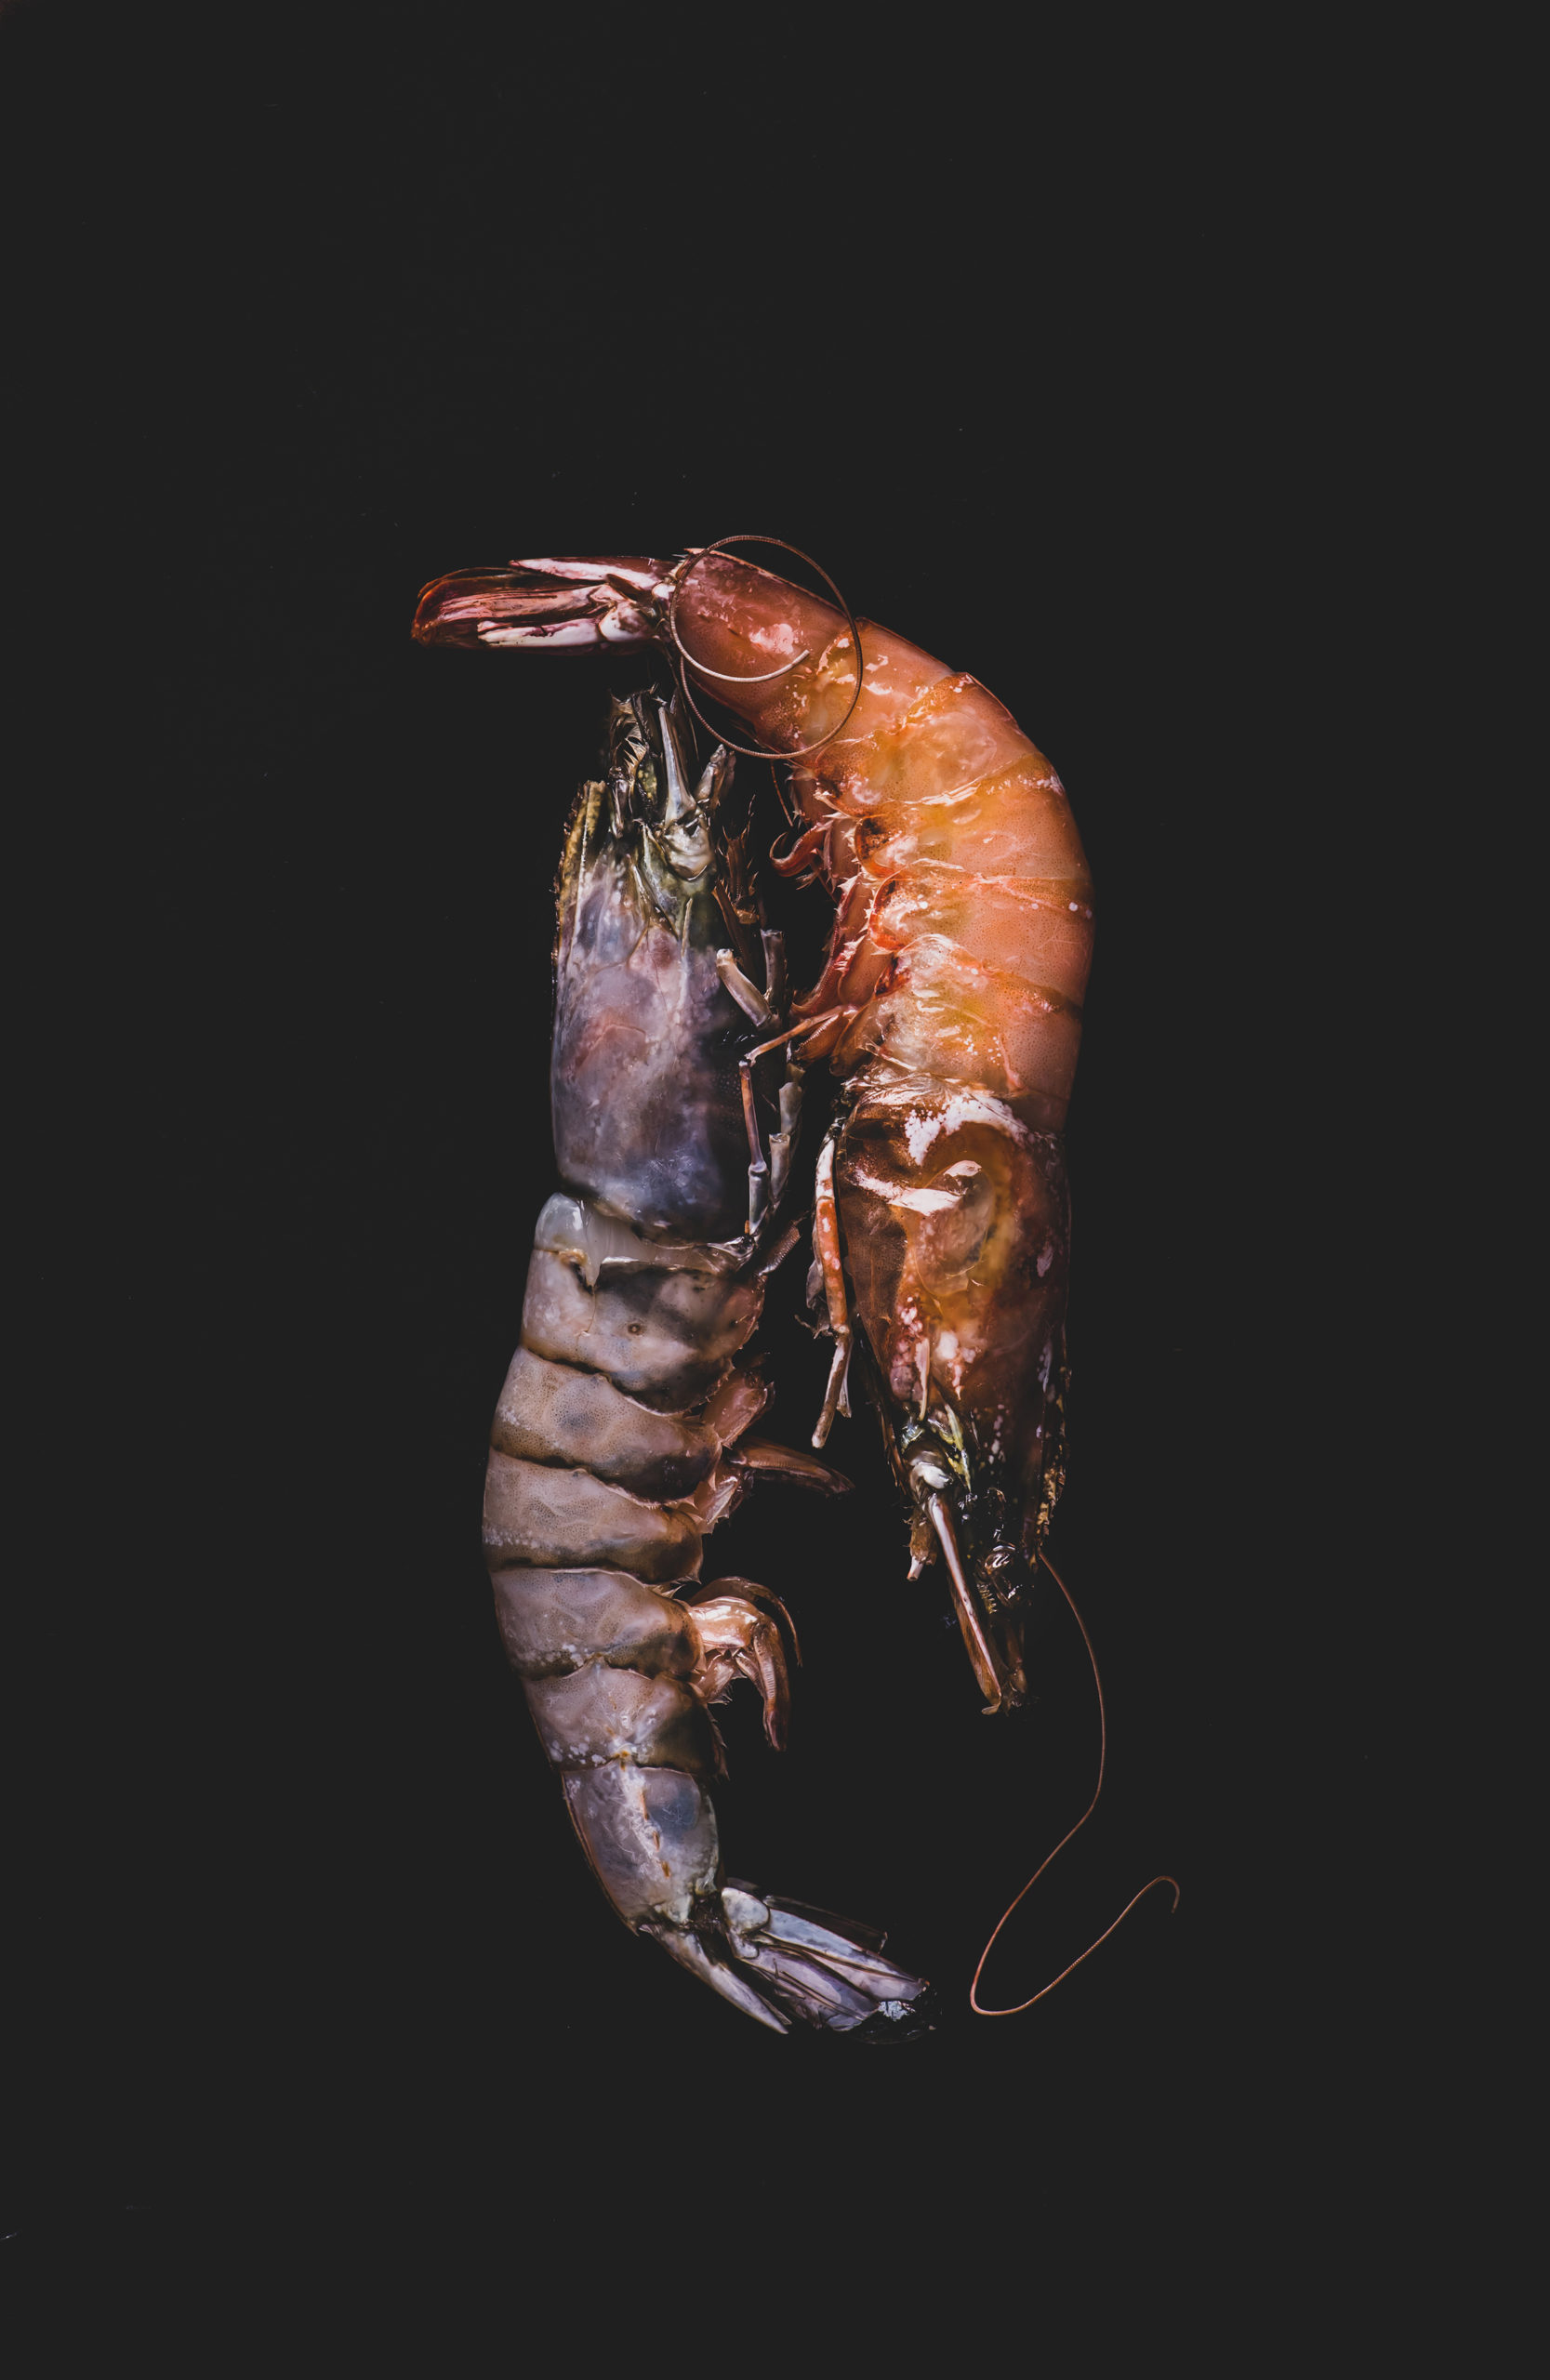 two prawns side by side on a dark background